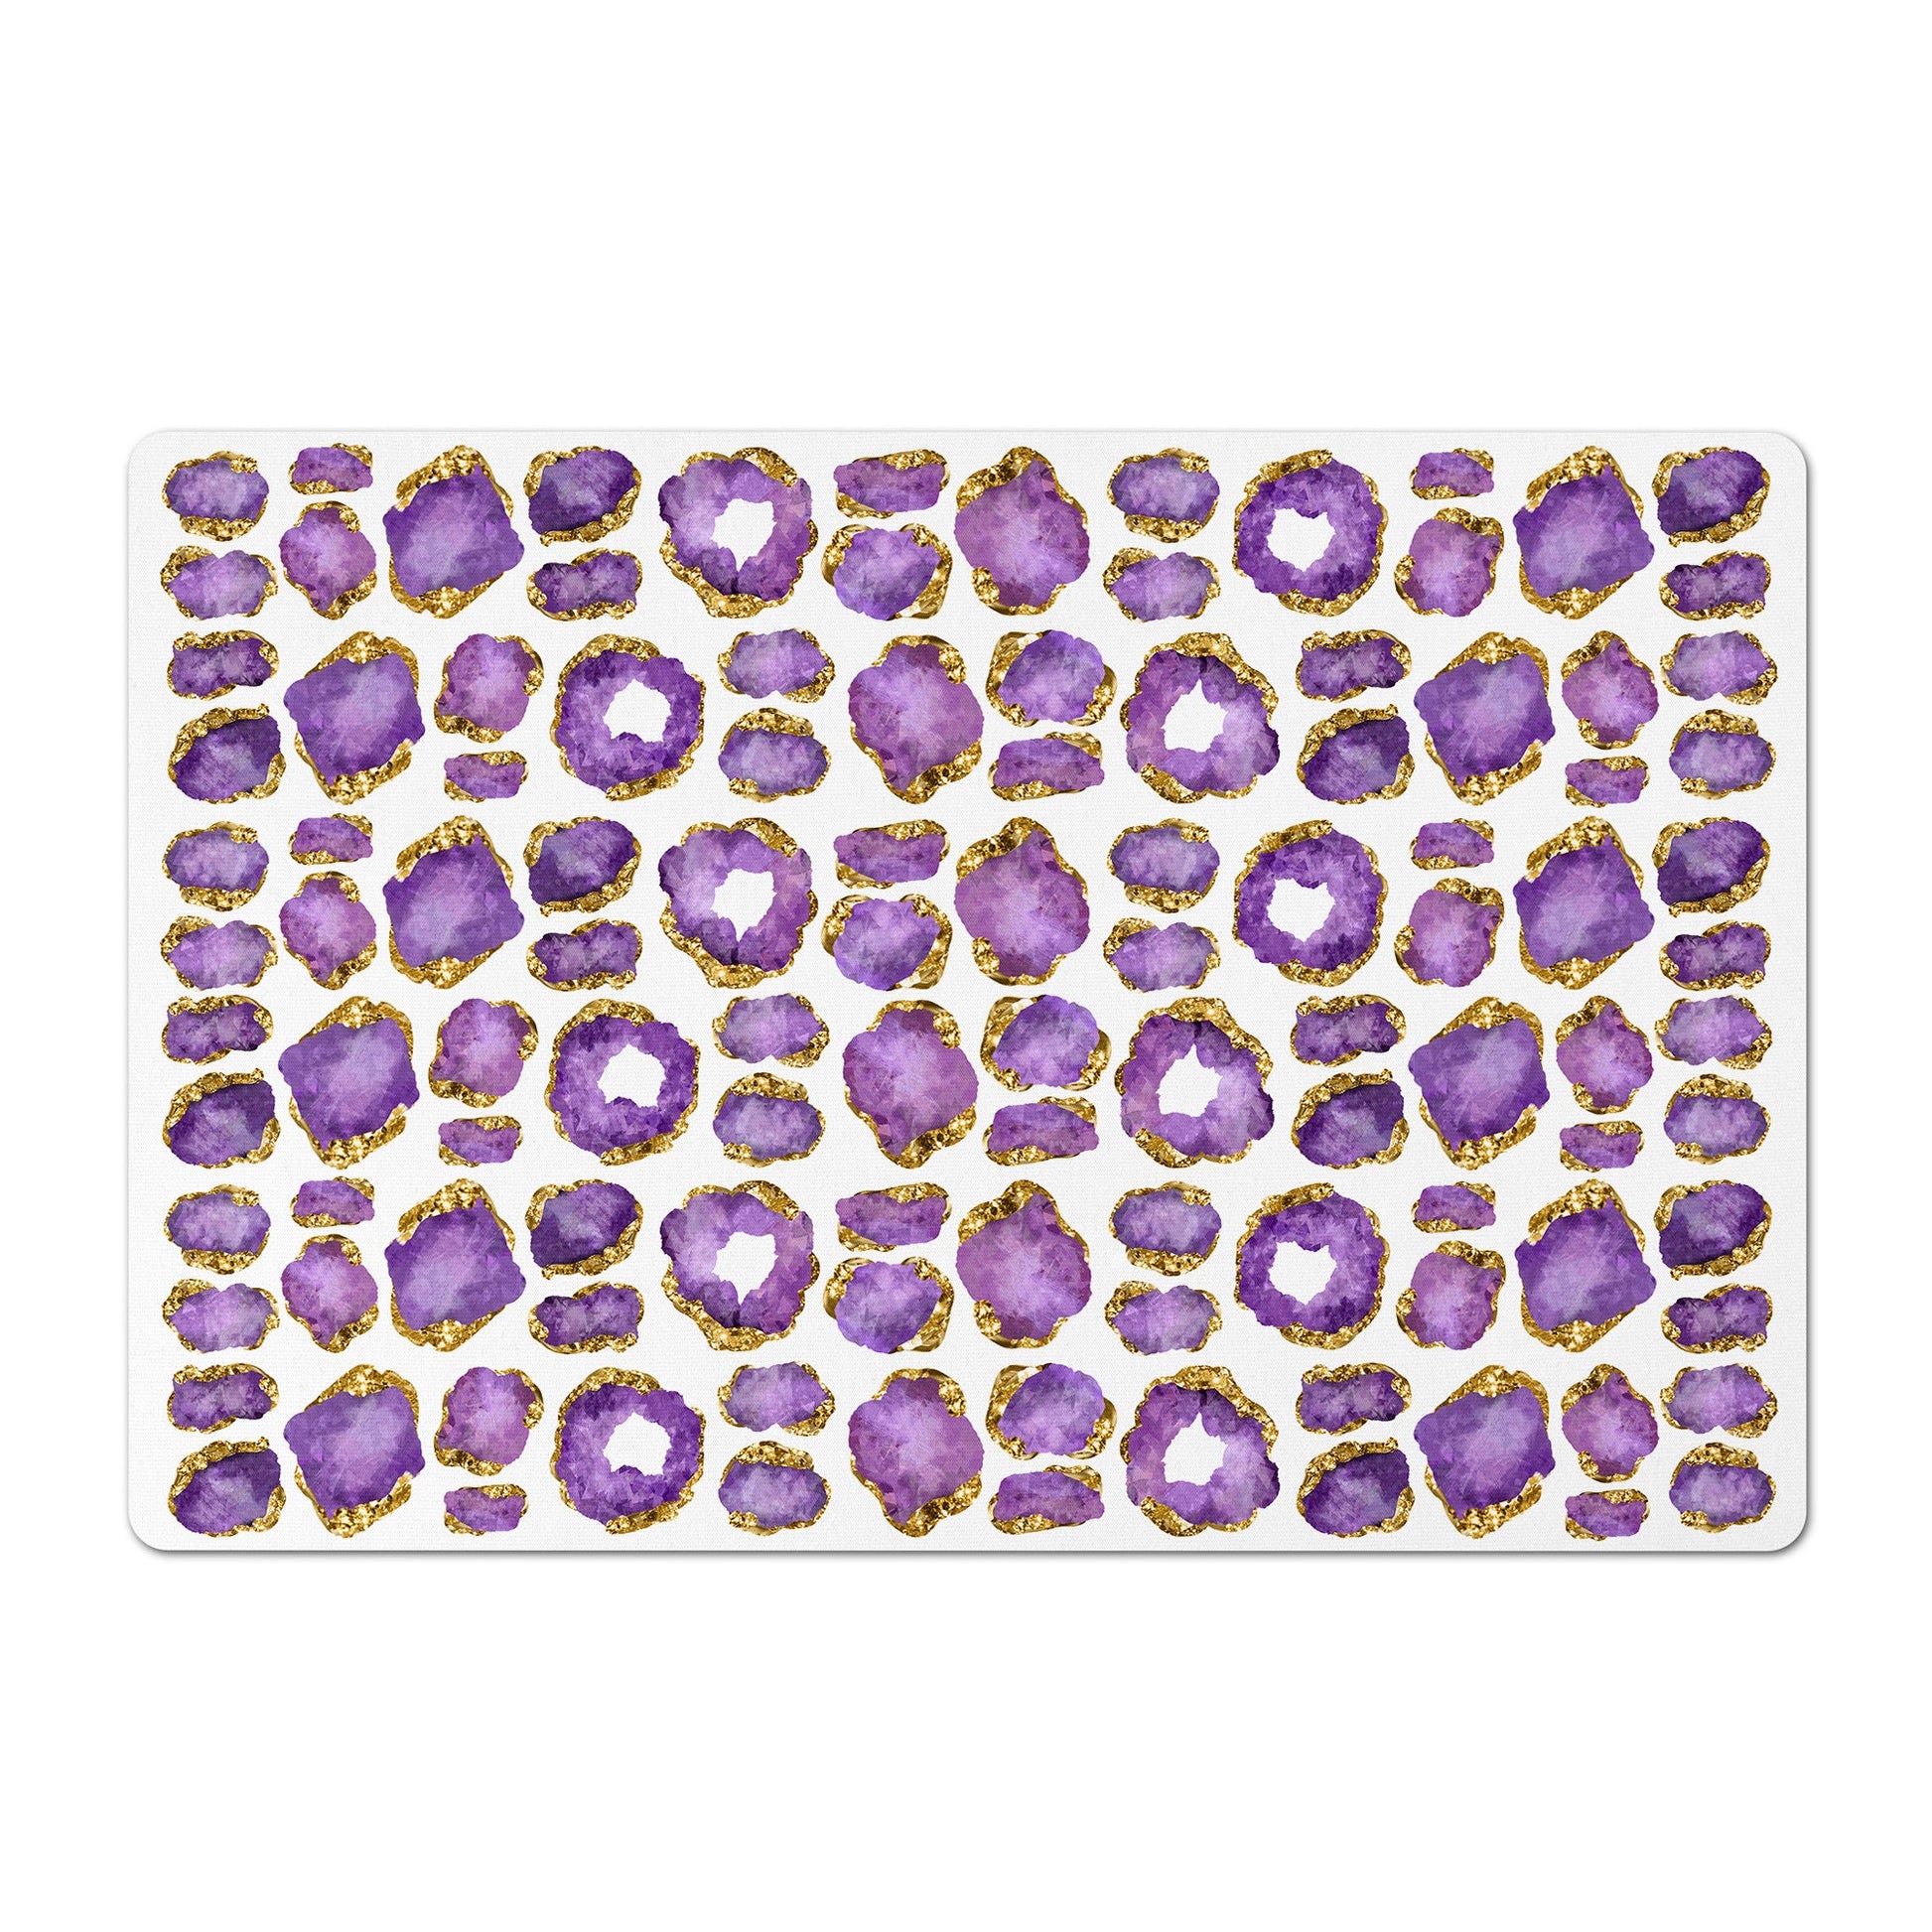 Pet food mat with amethyst jewel print for pet bowls.